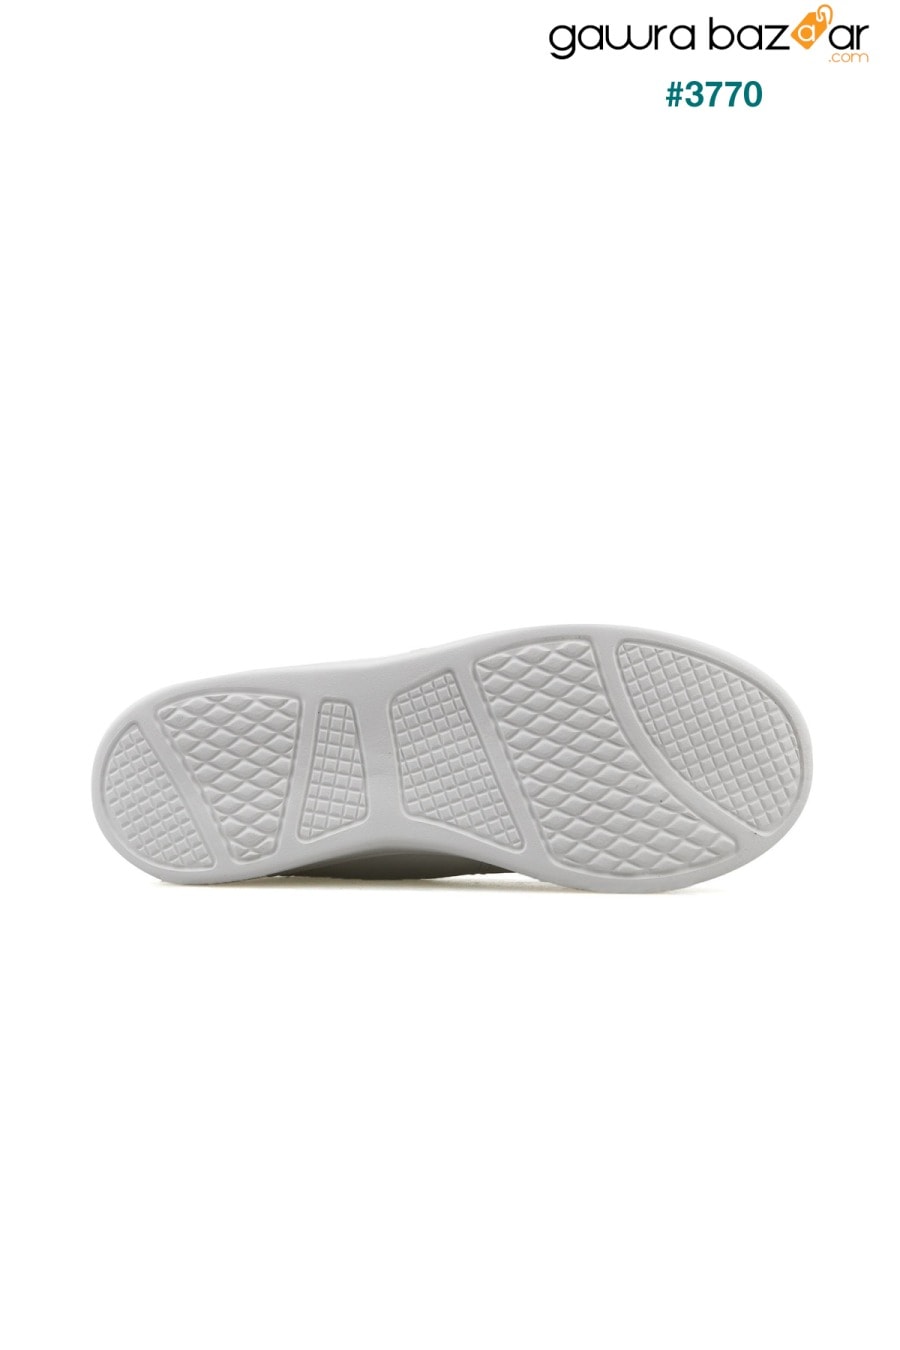 Uspolo Assn. Extra 2pr حذاء كاجوال نسائي أبيض 101172465 أبيض US Polo Assn 4